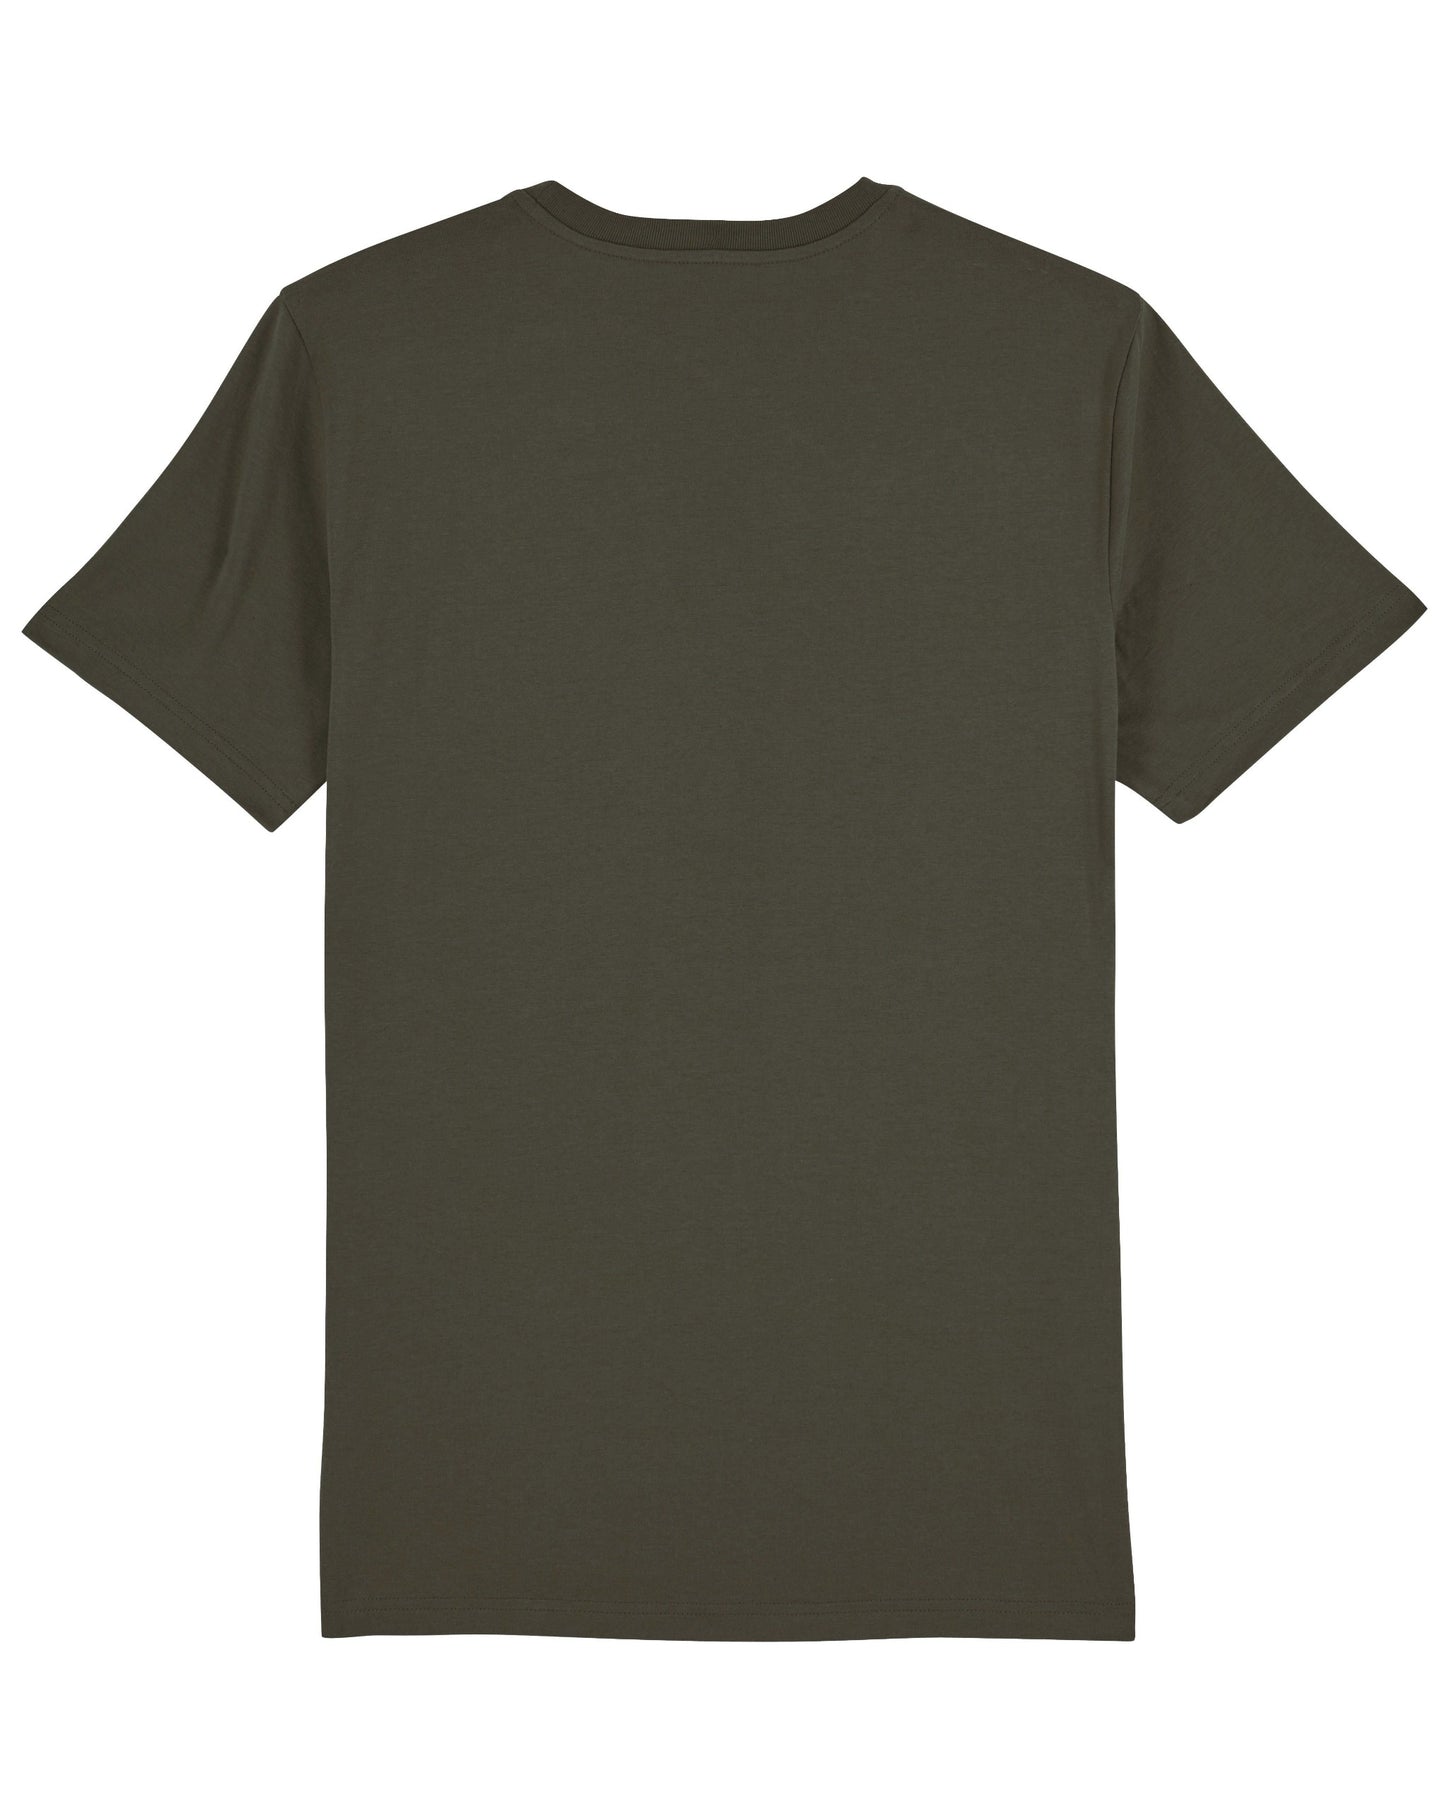 Hang Ten Seventy T-shirt - Khaki green